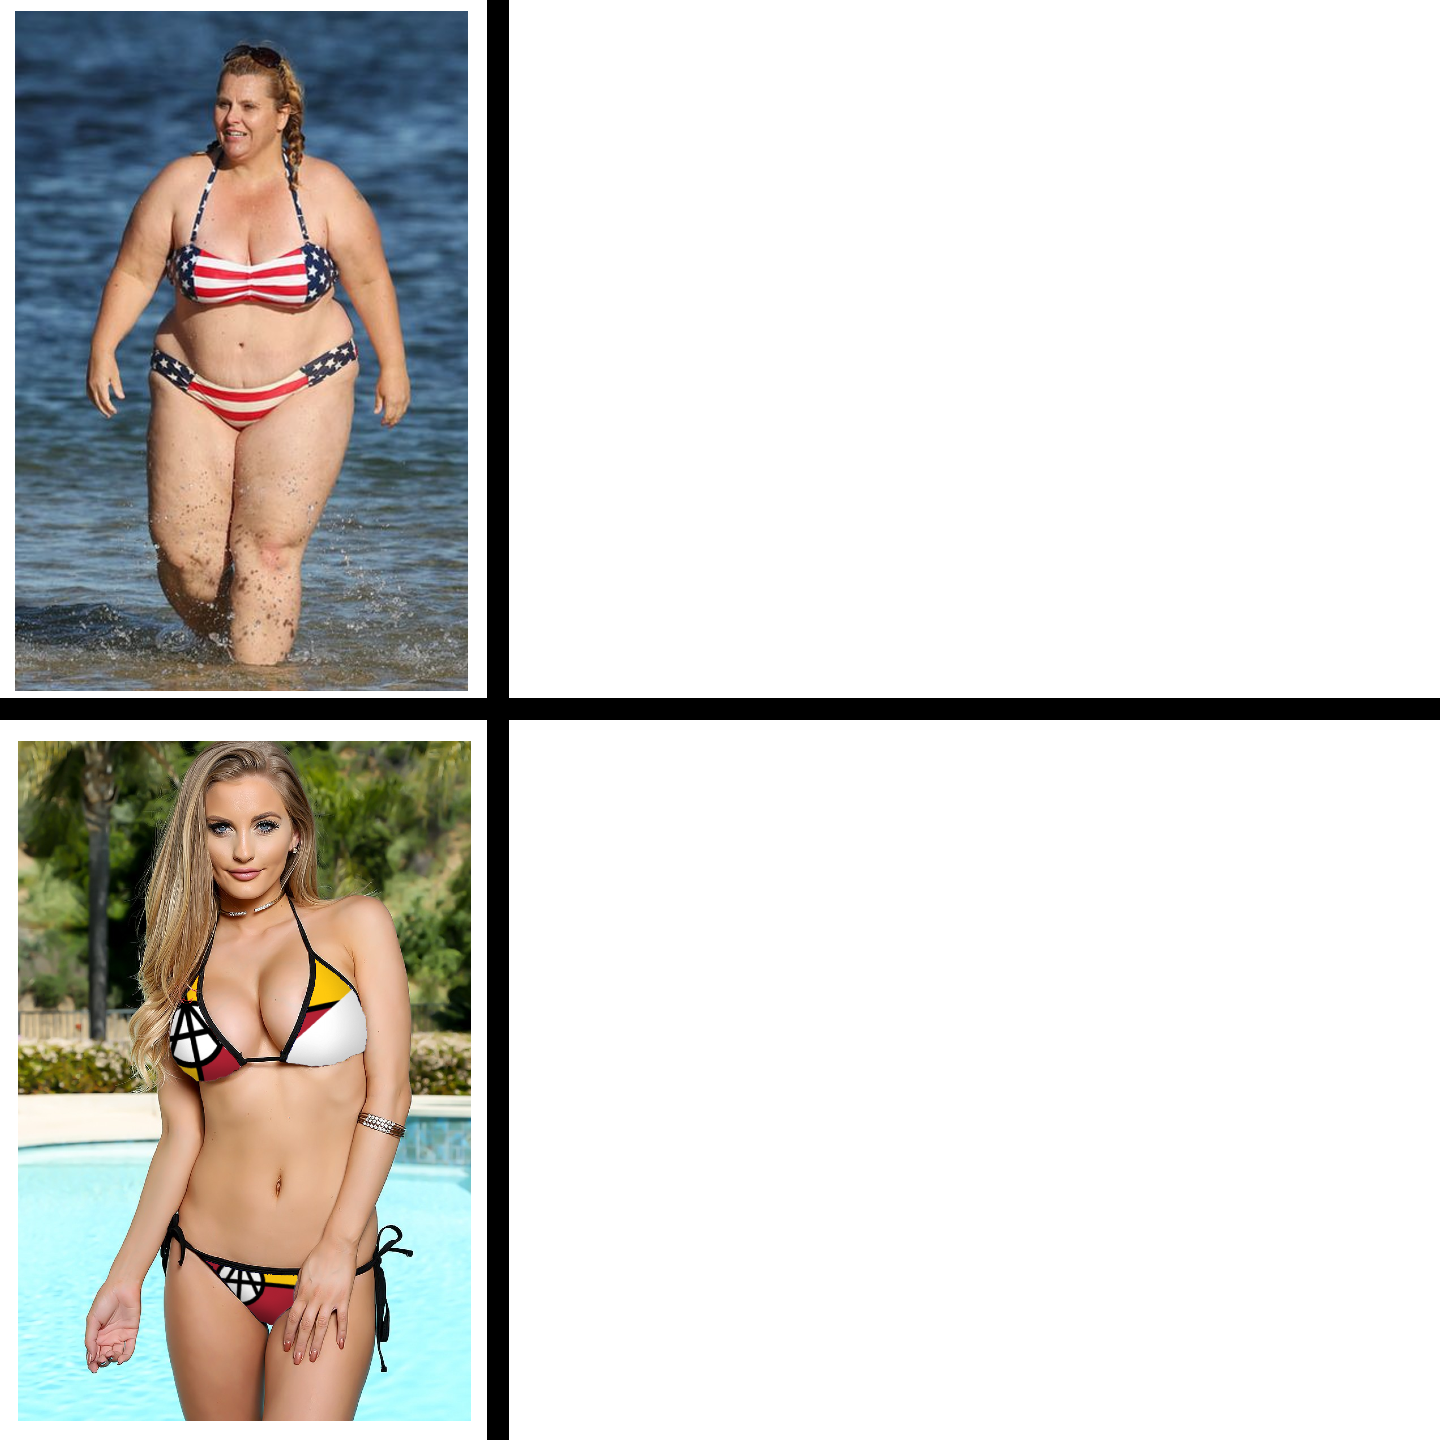 Fat vs pretty girl Blank Meme Template